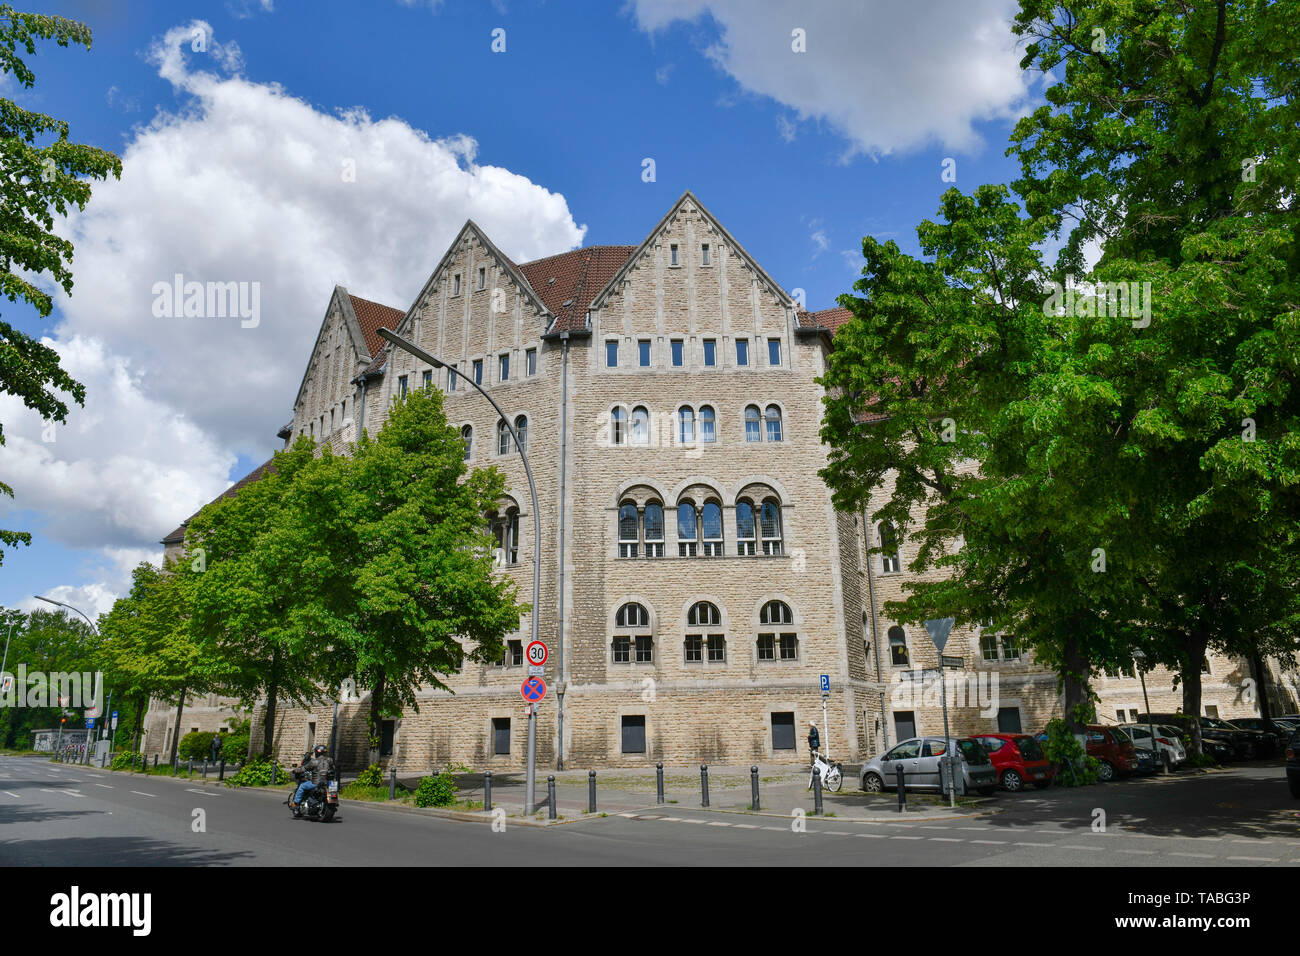 District court of Tegeler way, Osnabrück street, Charlottenburg, Berlin, Germany, Landgericht Tegeler Weg, Osnabrücker Straße, Deutschland Stock Photo